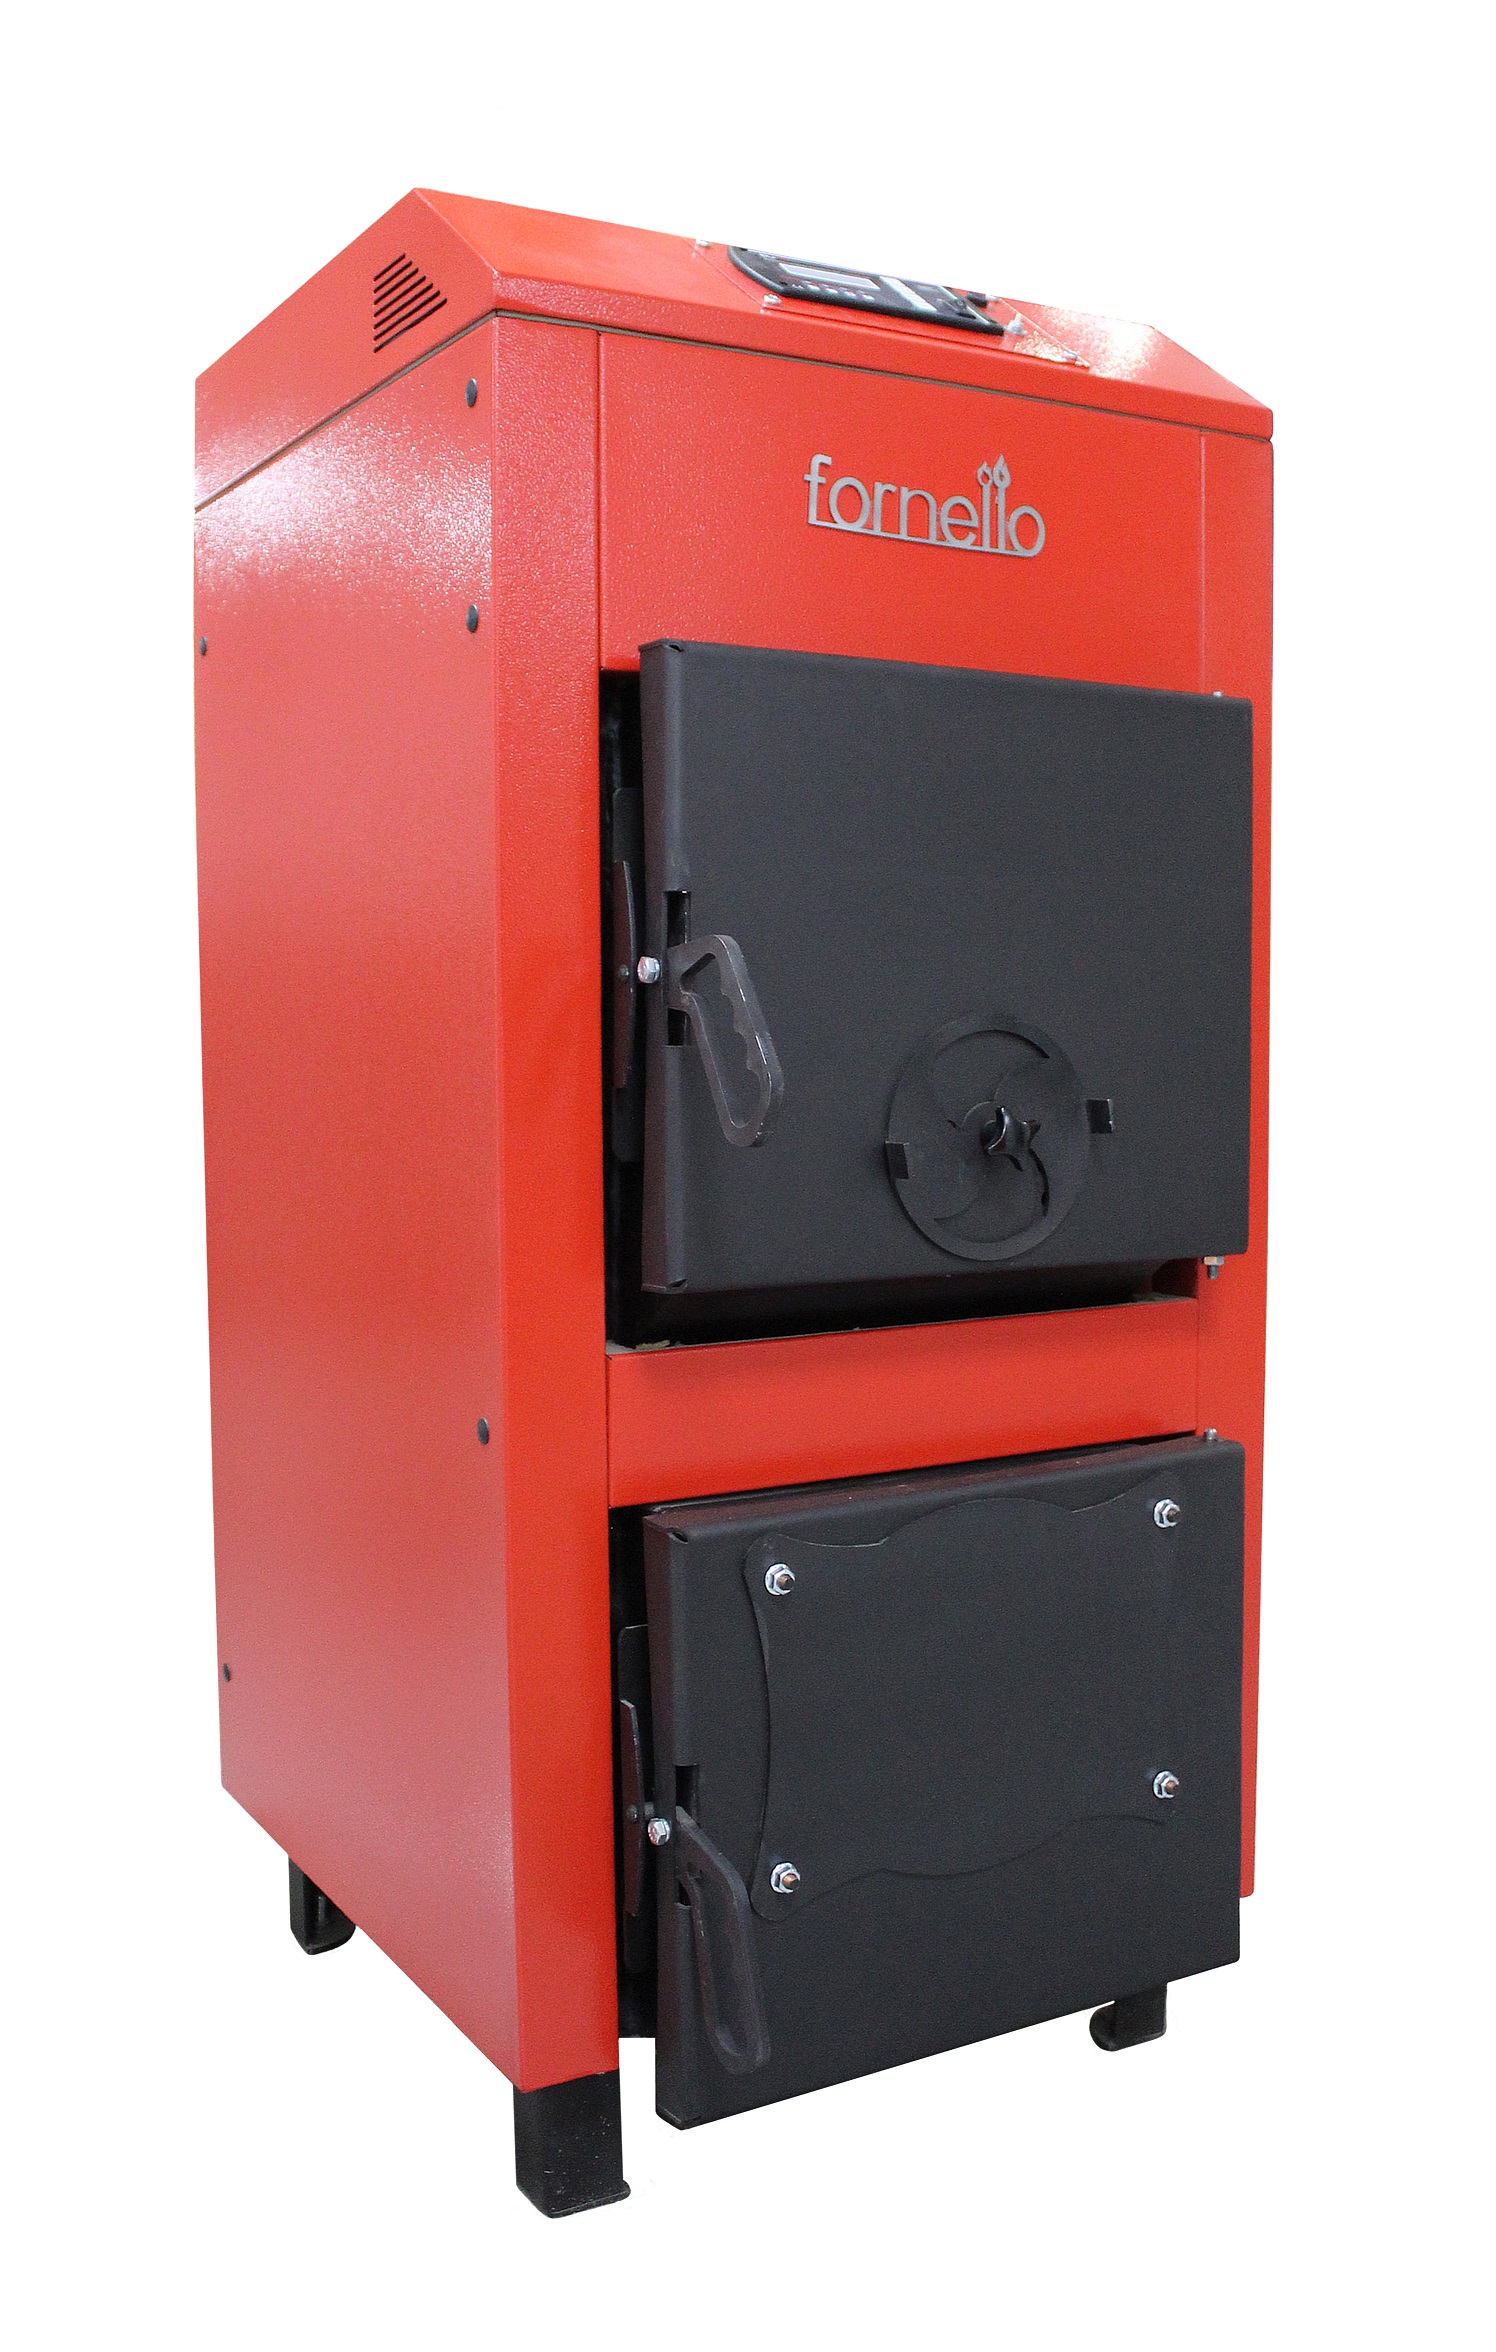 Centrala pe lemne, brichete si carbuni Fornello A 25 kW, cu ventilator si automatizare, serpentina de racire si flansa pentru arzator cu peleti Fornello imagine bricosteel.ro